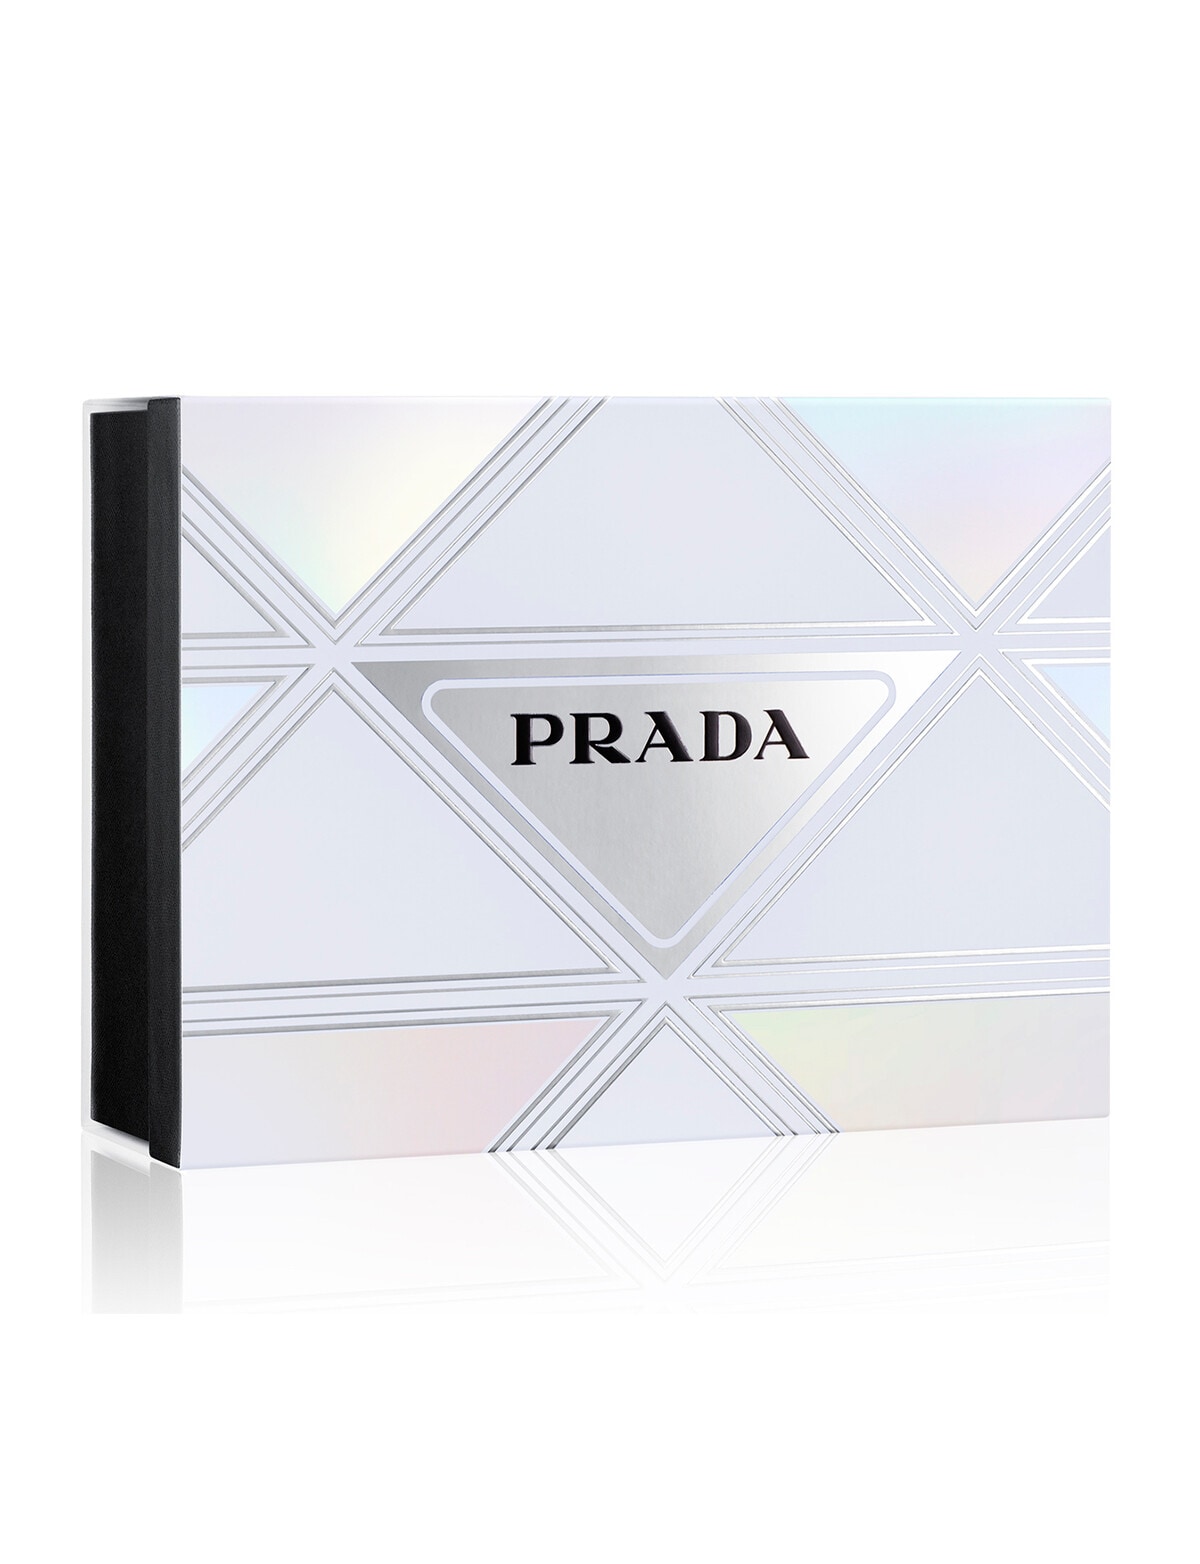 Prada Luna Rossa Ocean EDT 50ml 2 Piece Perfume Gift Set - Gift Sets